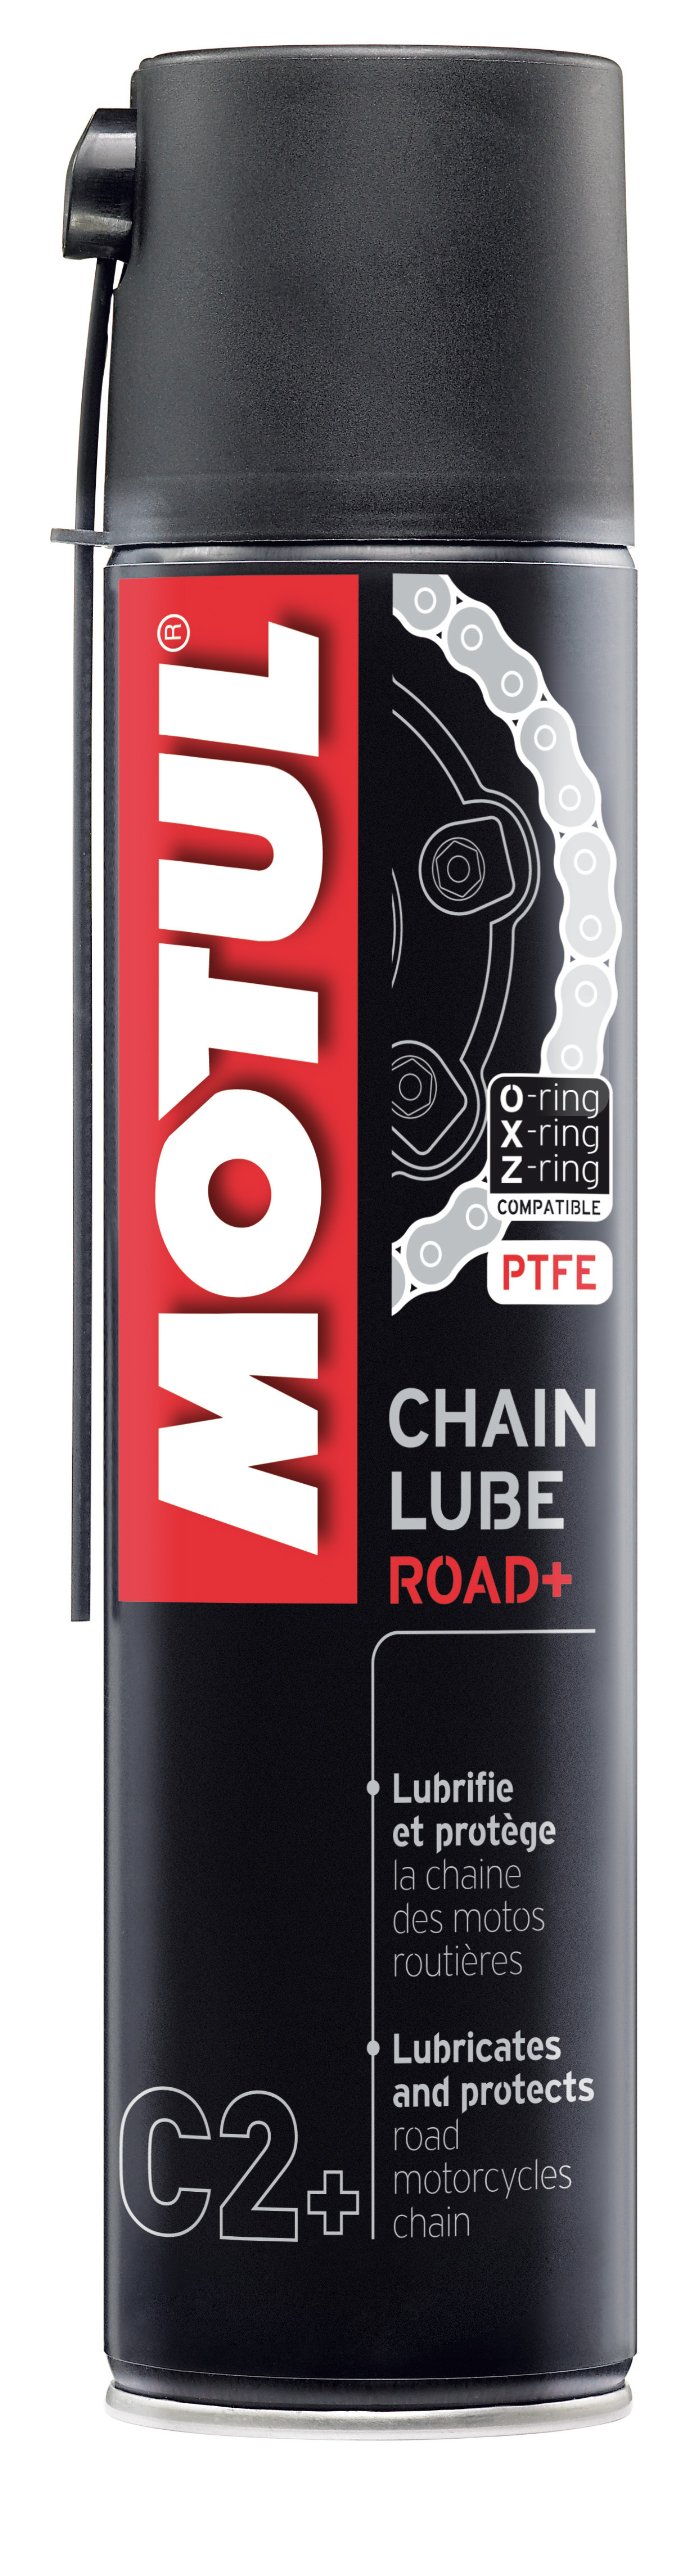 Motul 103008 C2+ Chain Lube Road Plus, 400 ml, 150x20x10 von Motul